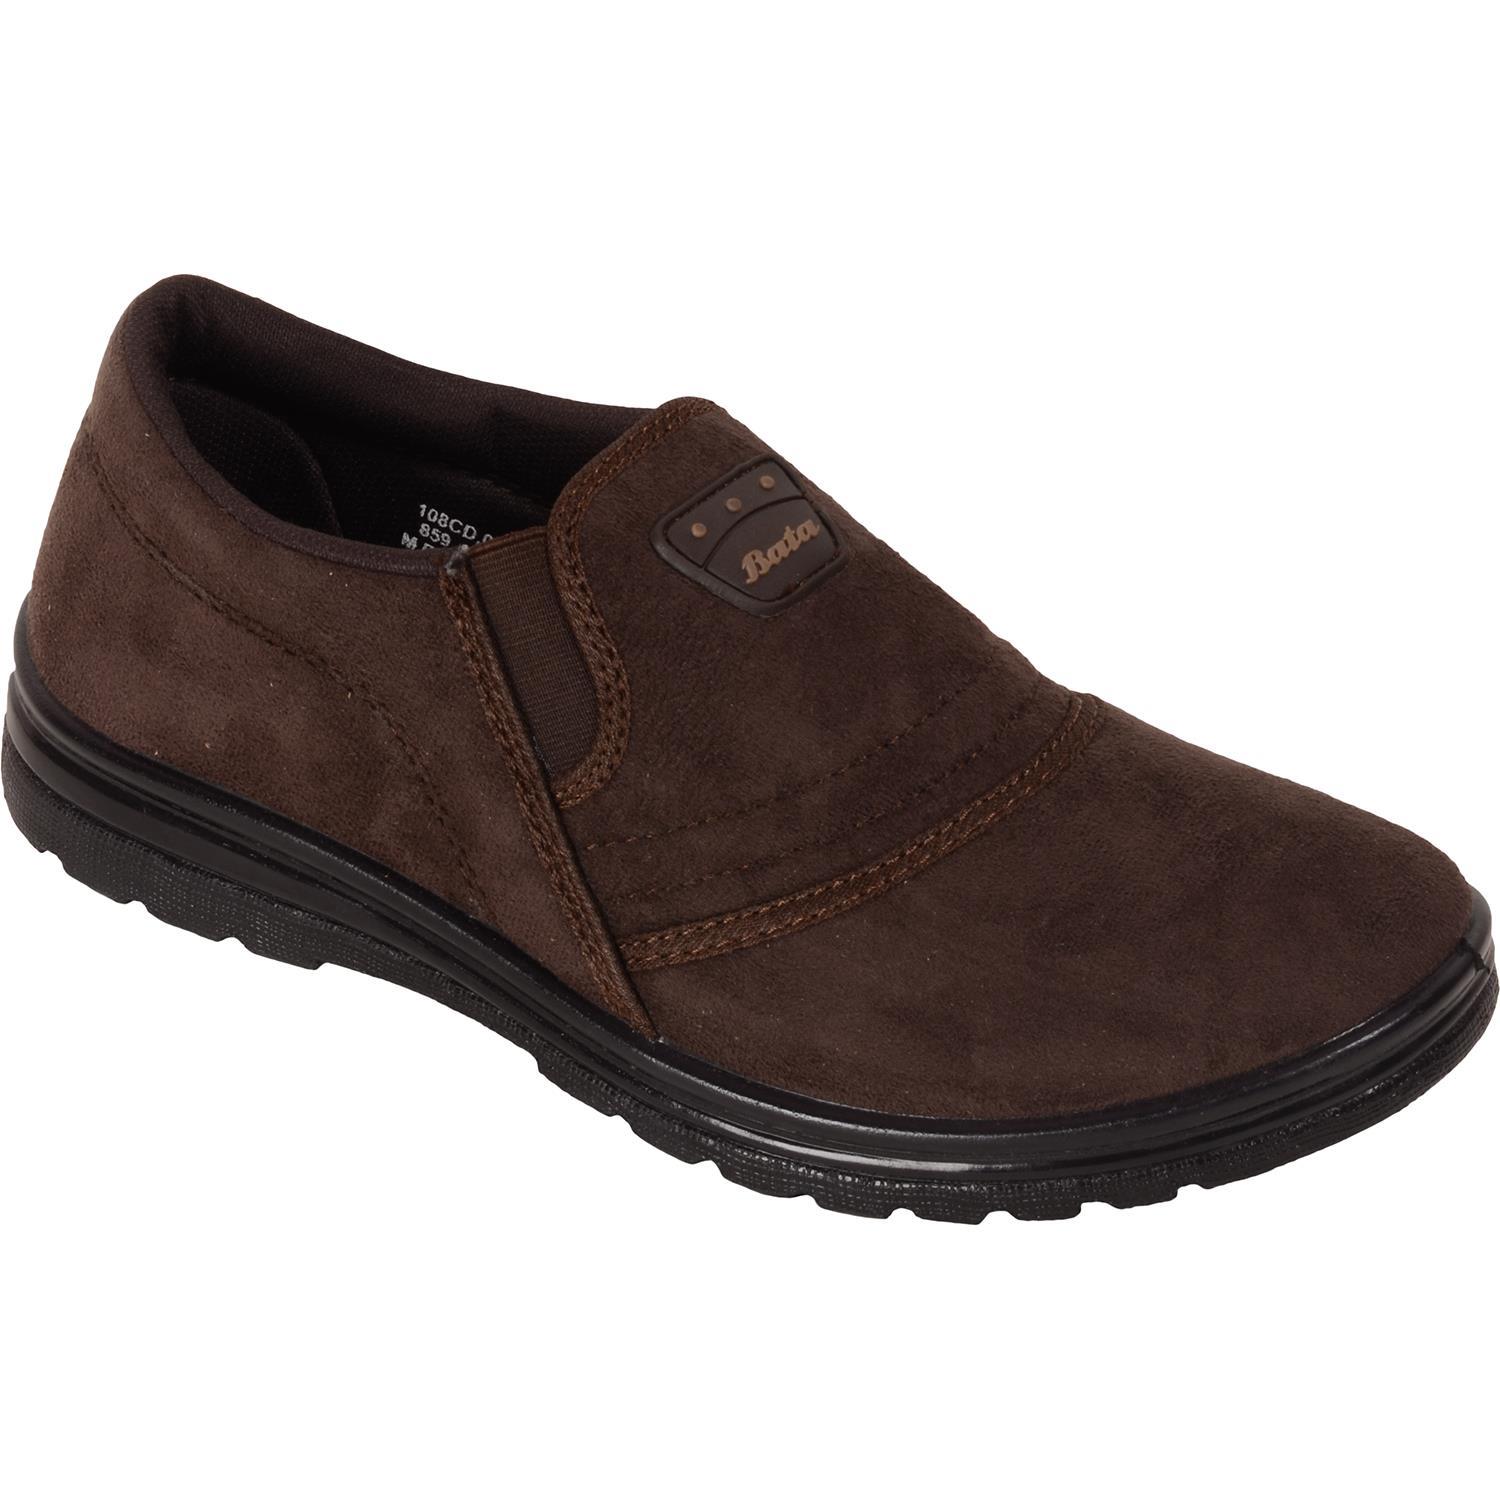 Bata Brand Men's 859-4102 Casual Canvas Shoes (Brown) :: RAJASHOES